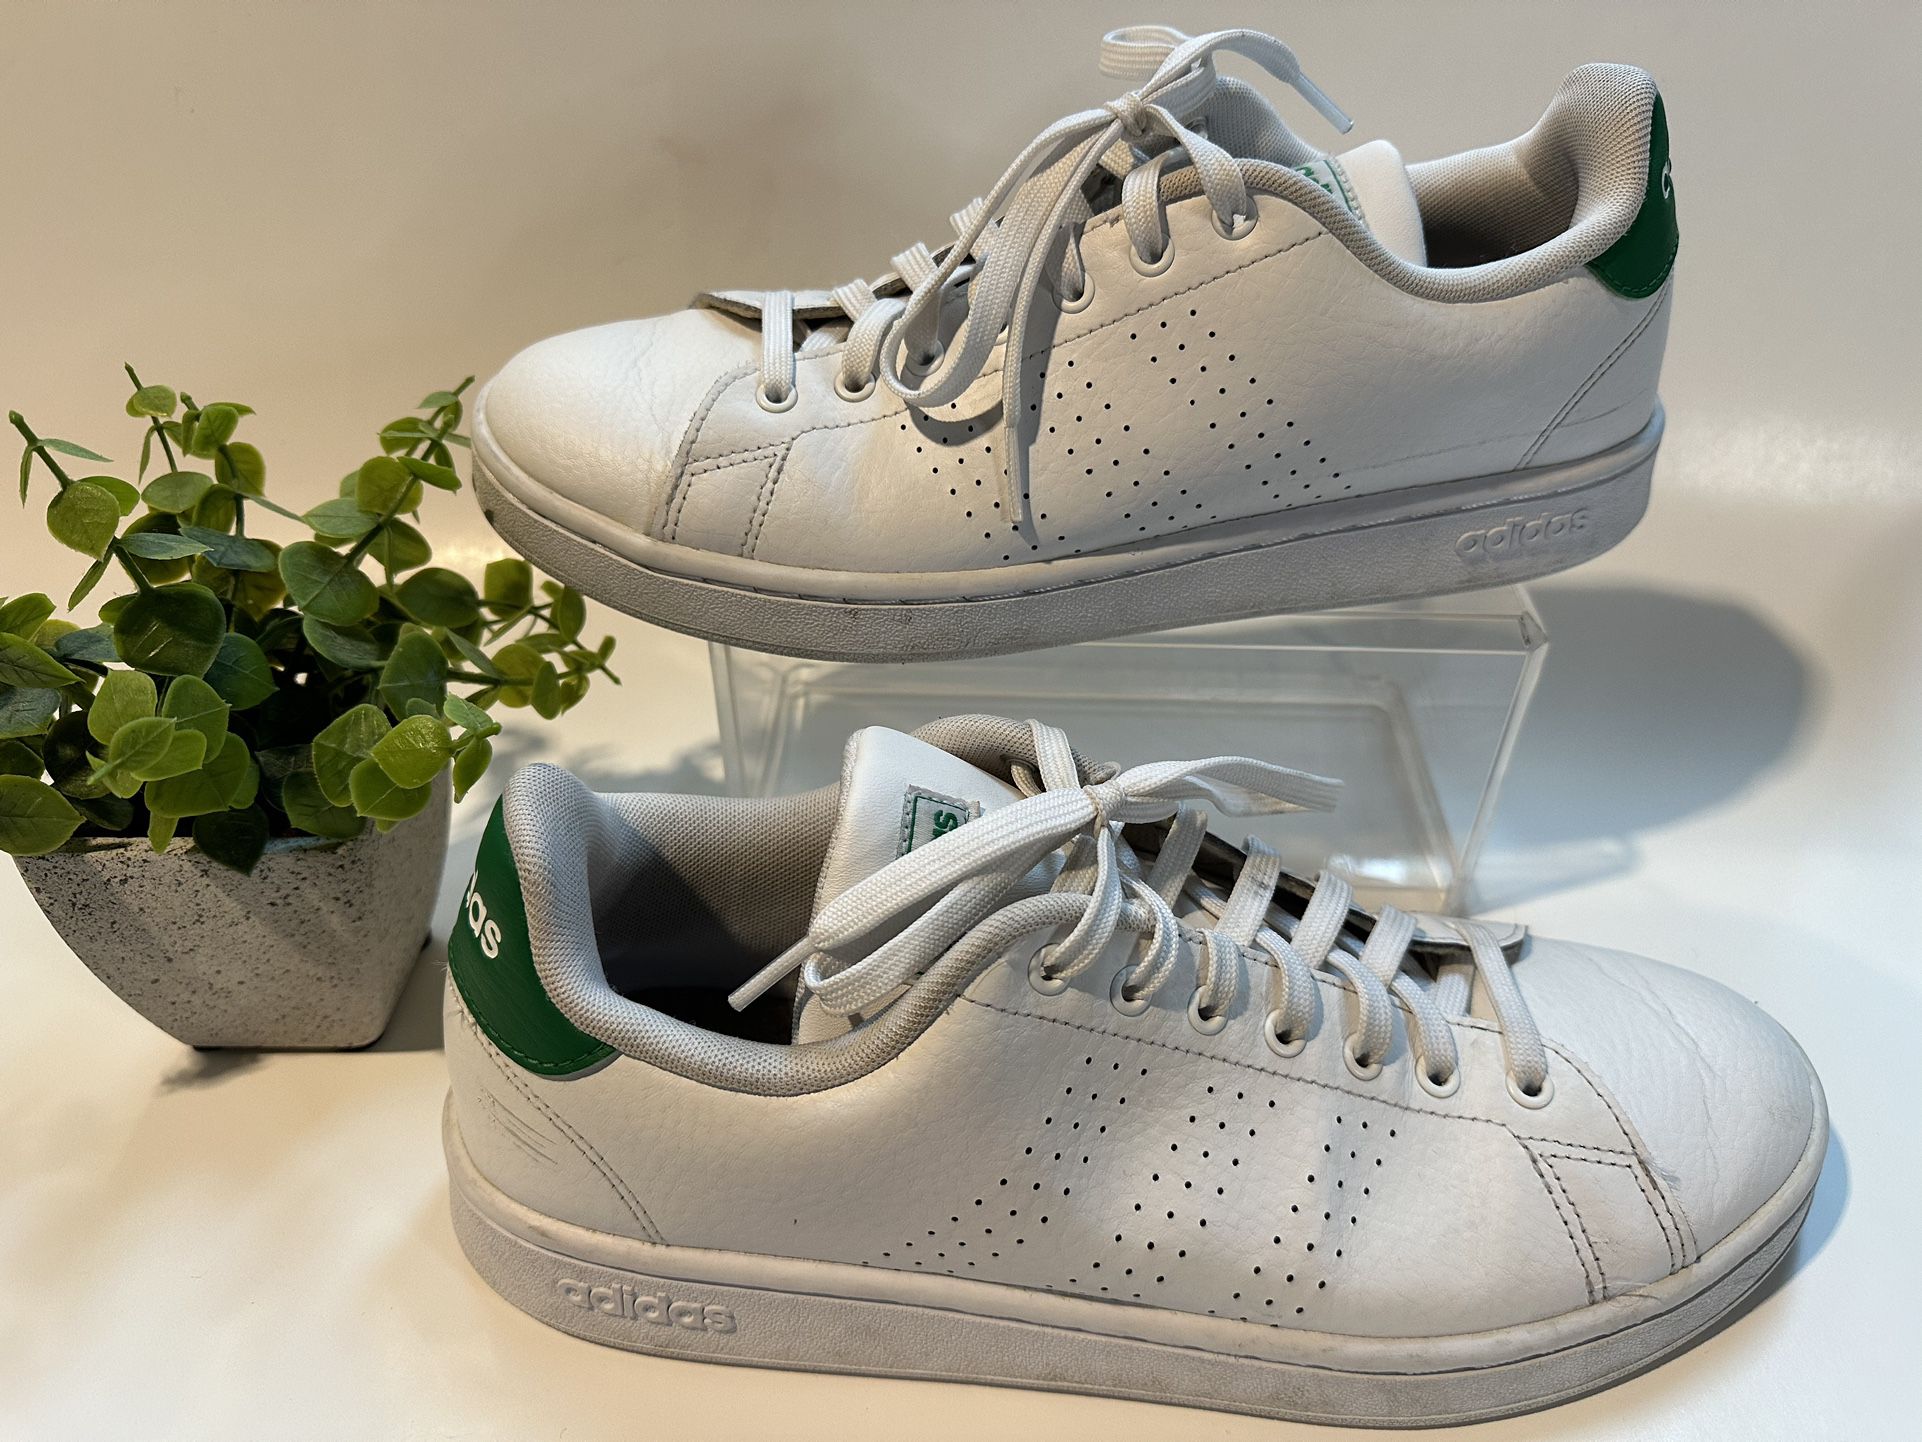 Adidas Advantage Style F36424 White/Green Men's Size 10